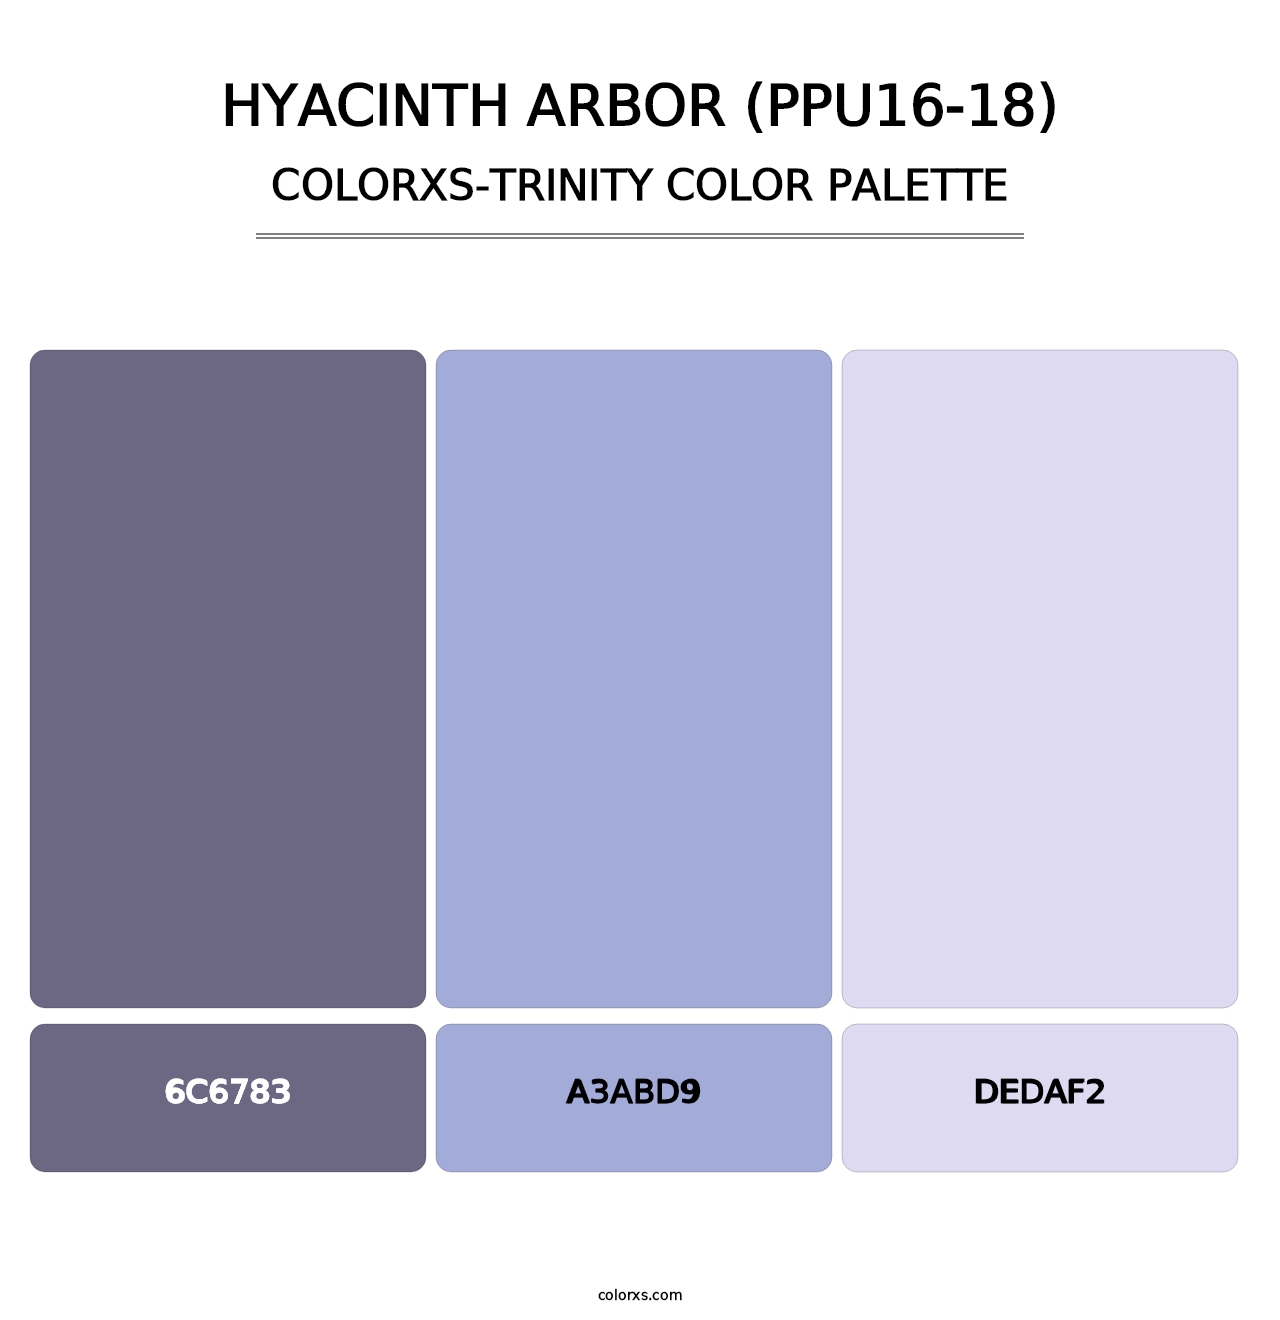 Hyacinth Arbor (PPU16-18) - Colorxs Trinity Palette